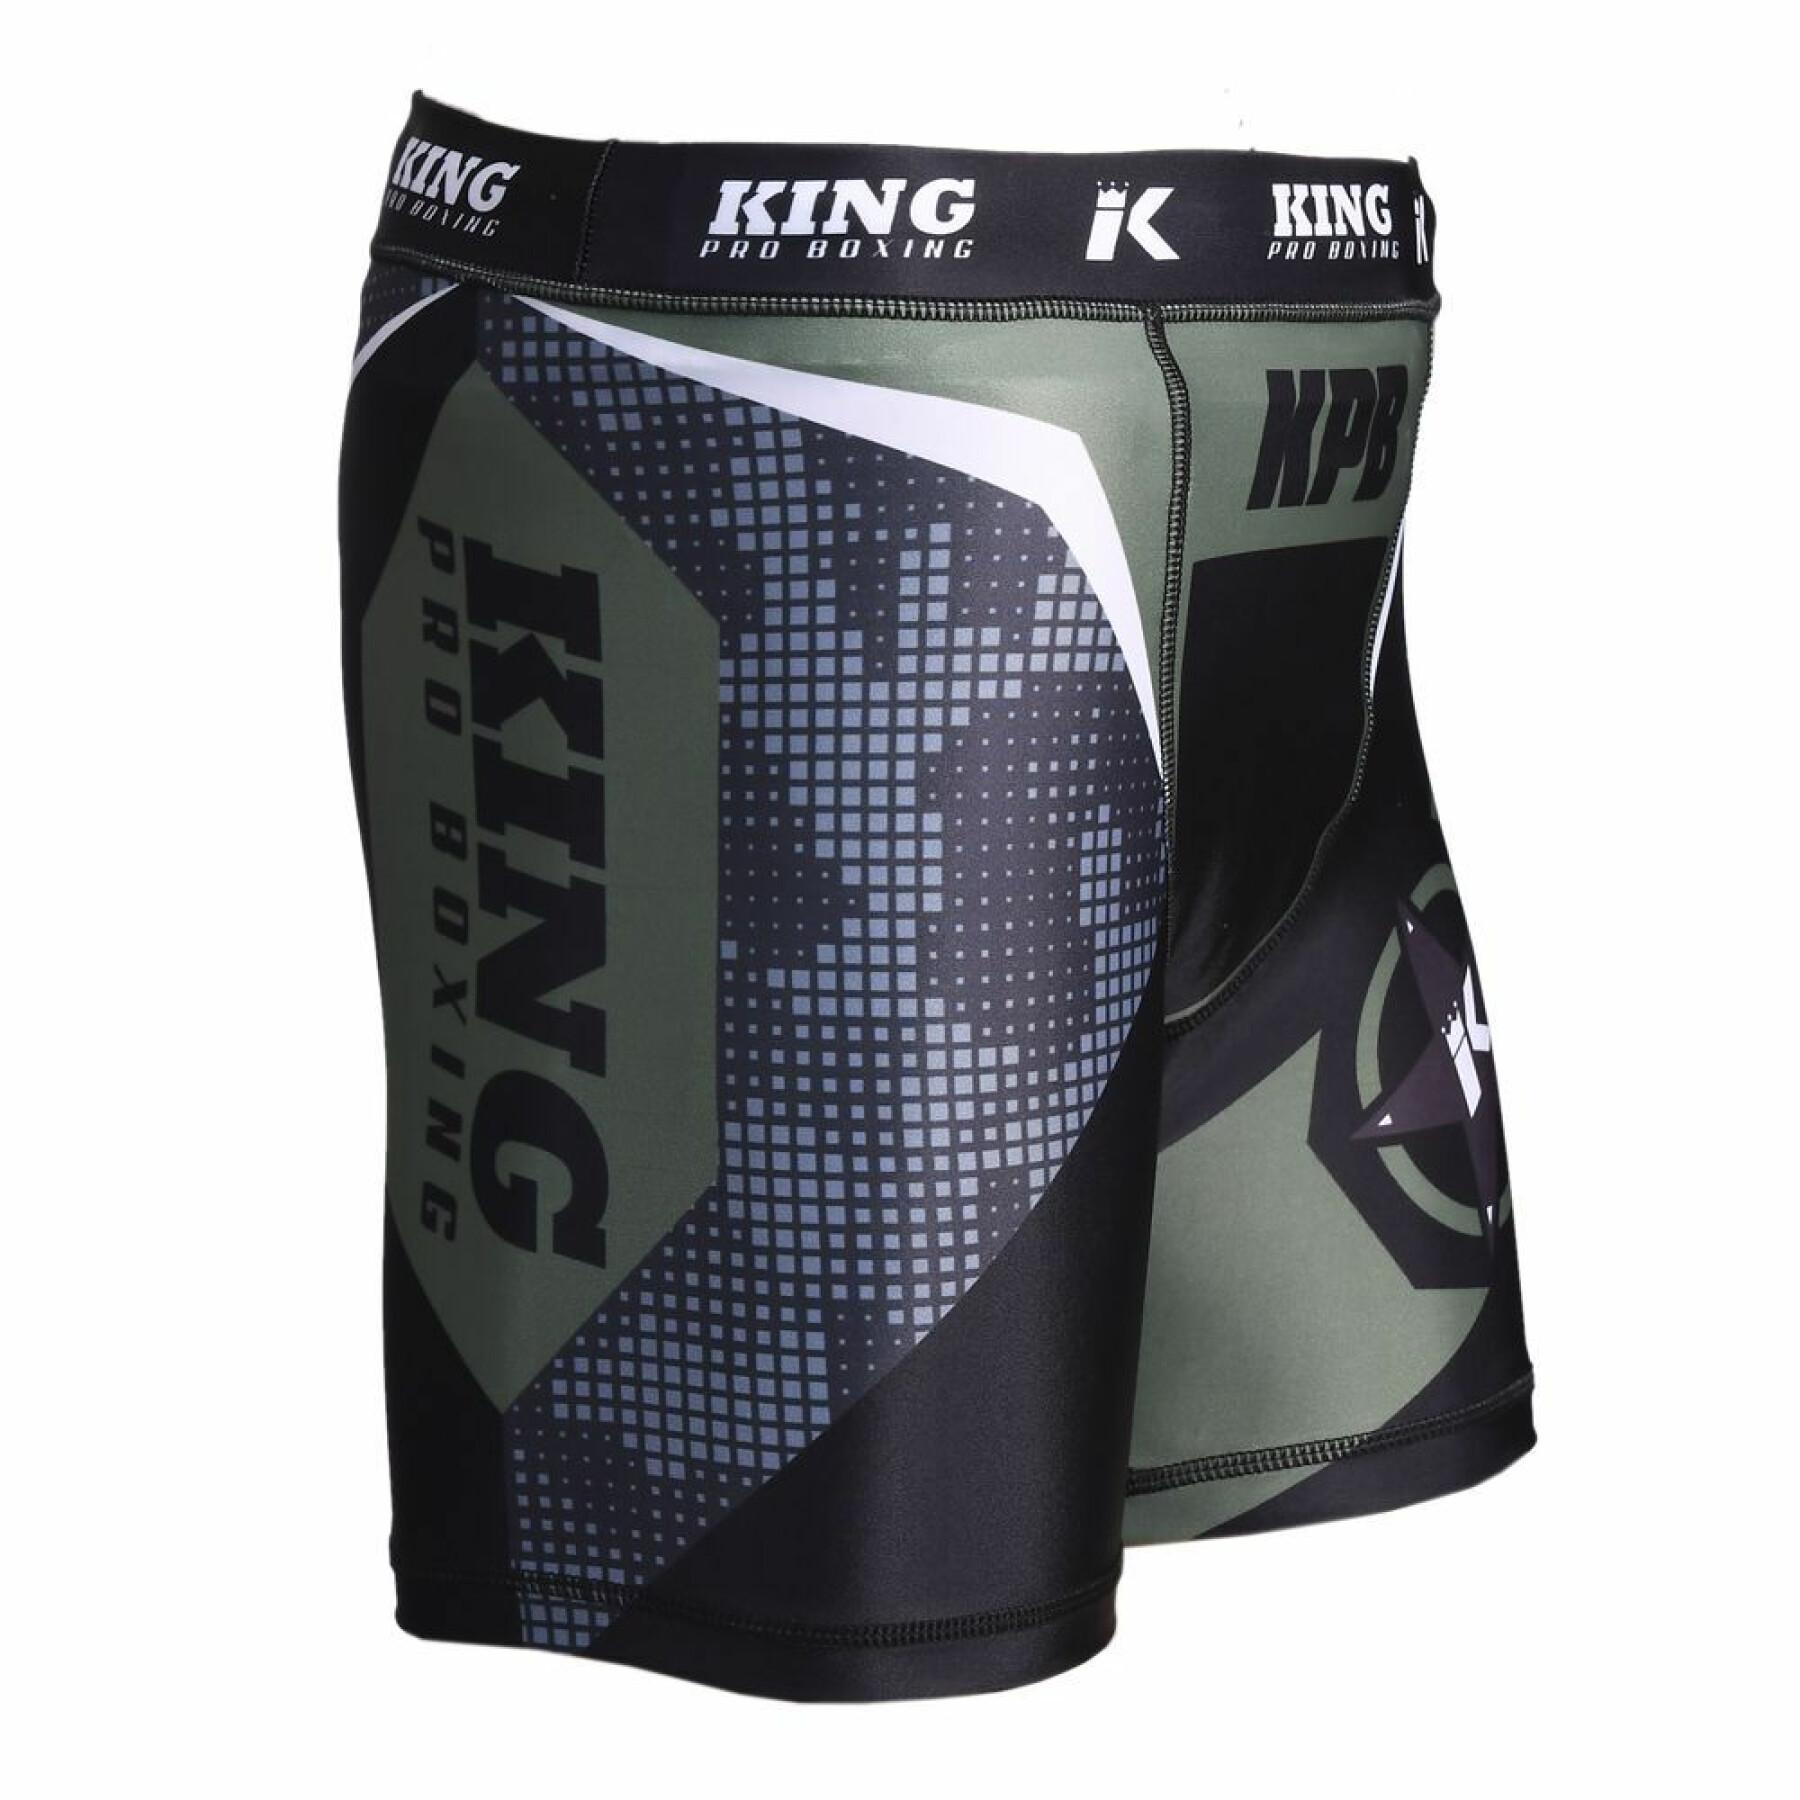 Pantalones cortos de compresión King Pro Boxing Stormking 1